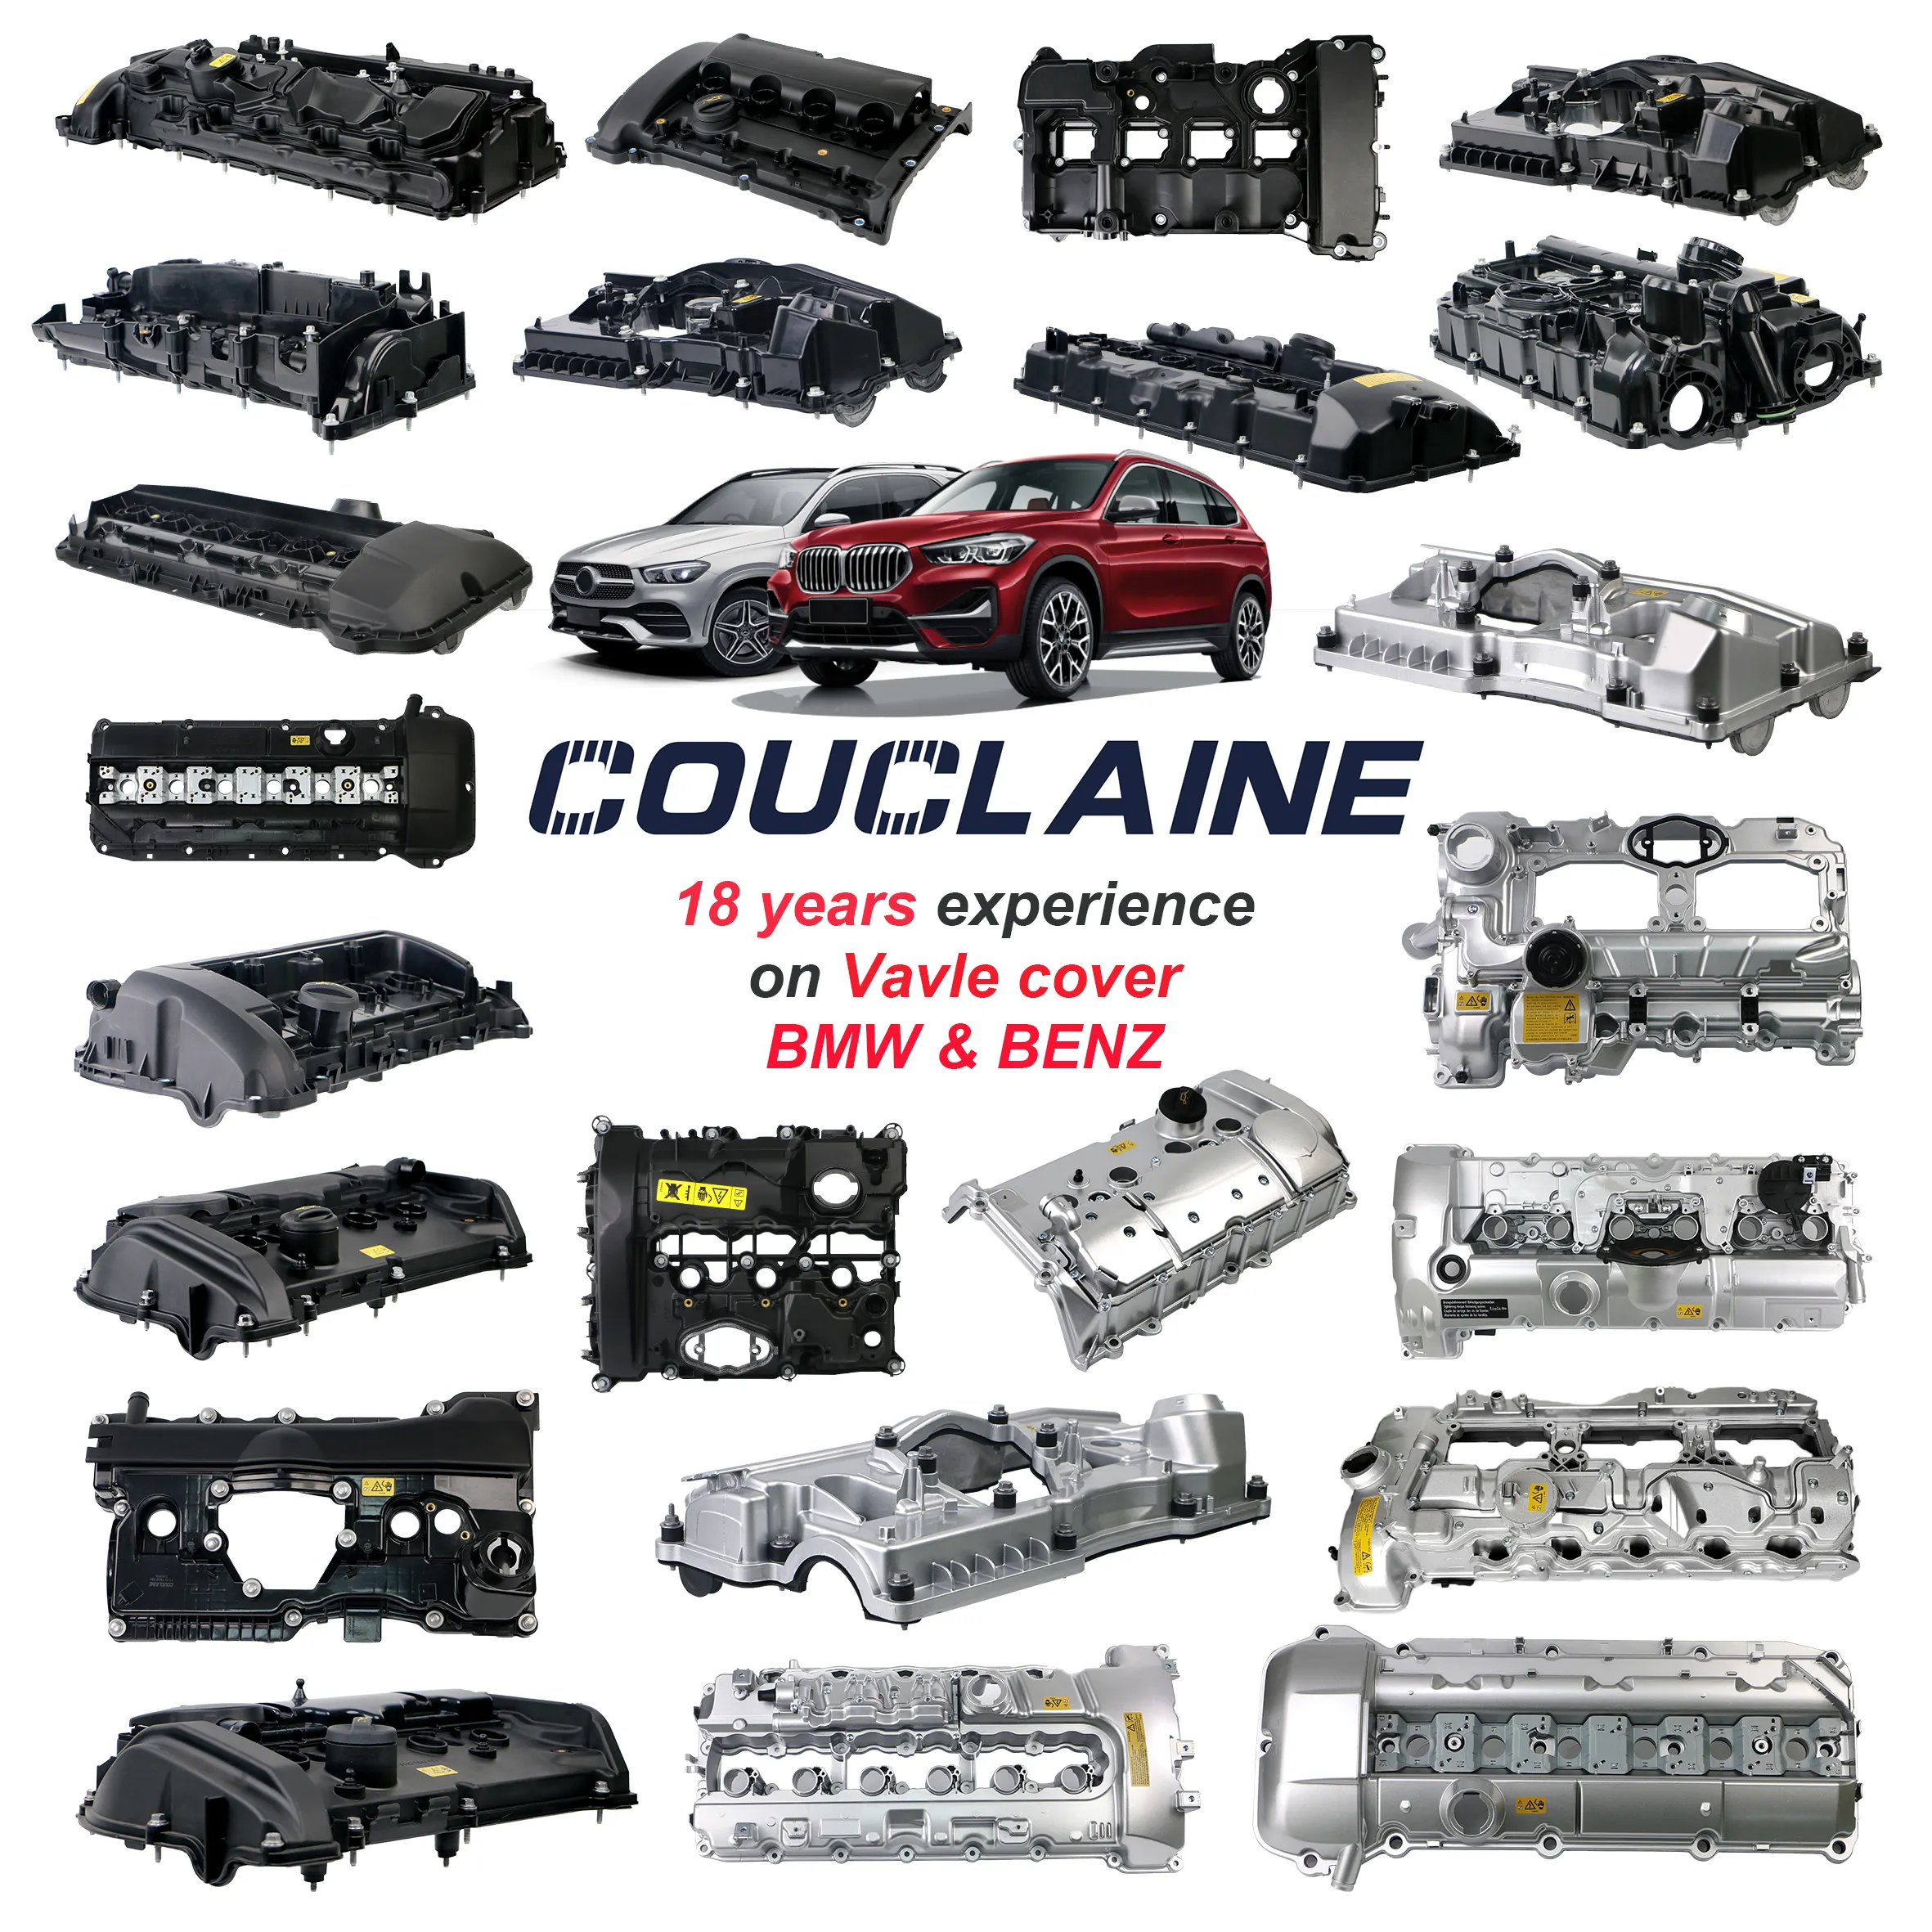 Couclaine nuevo motor N54 N55 N20 N63 S54 S65 cubierta de válvula para BMW coche mercedes-benz Coche